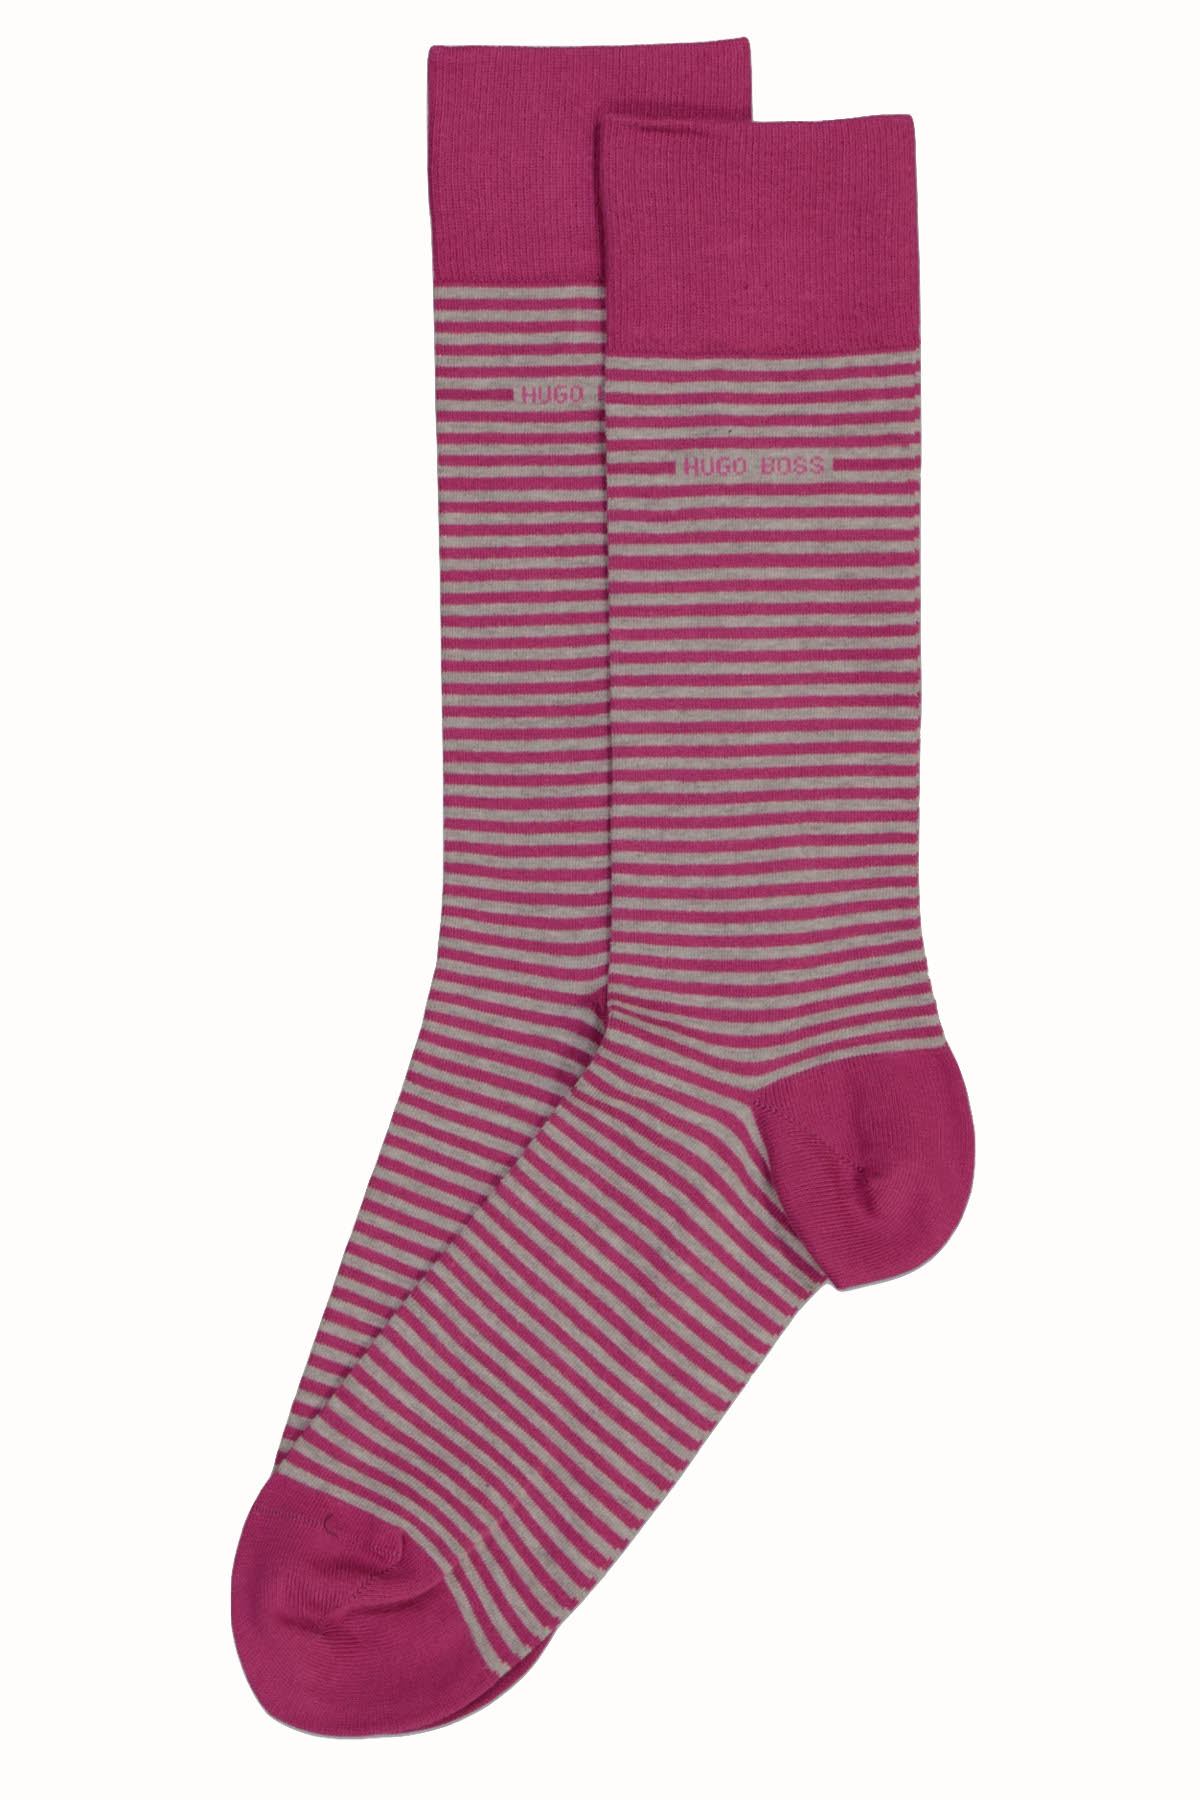 Hugo Boss Purple & Grey Stripe Sock